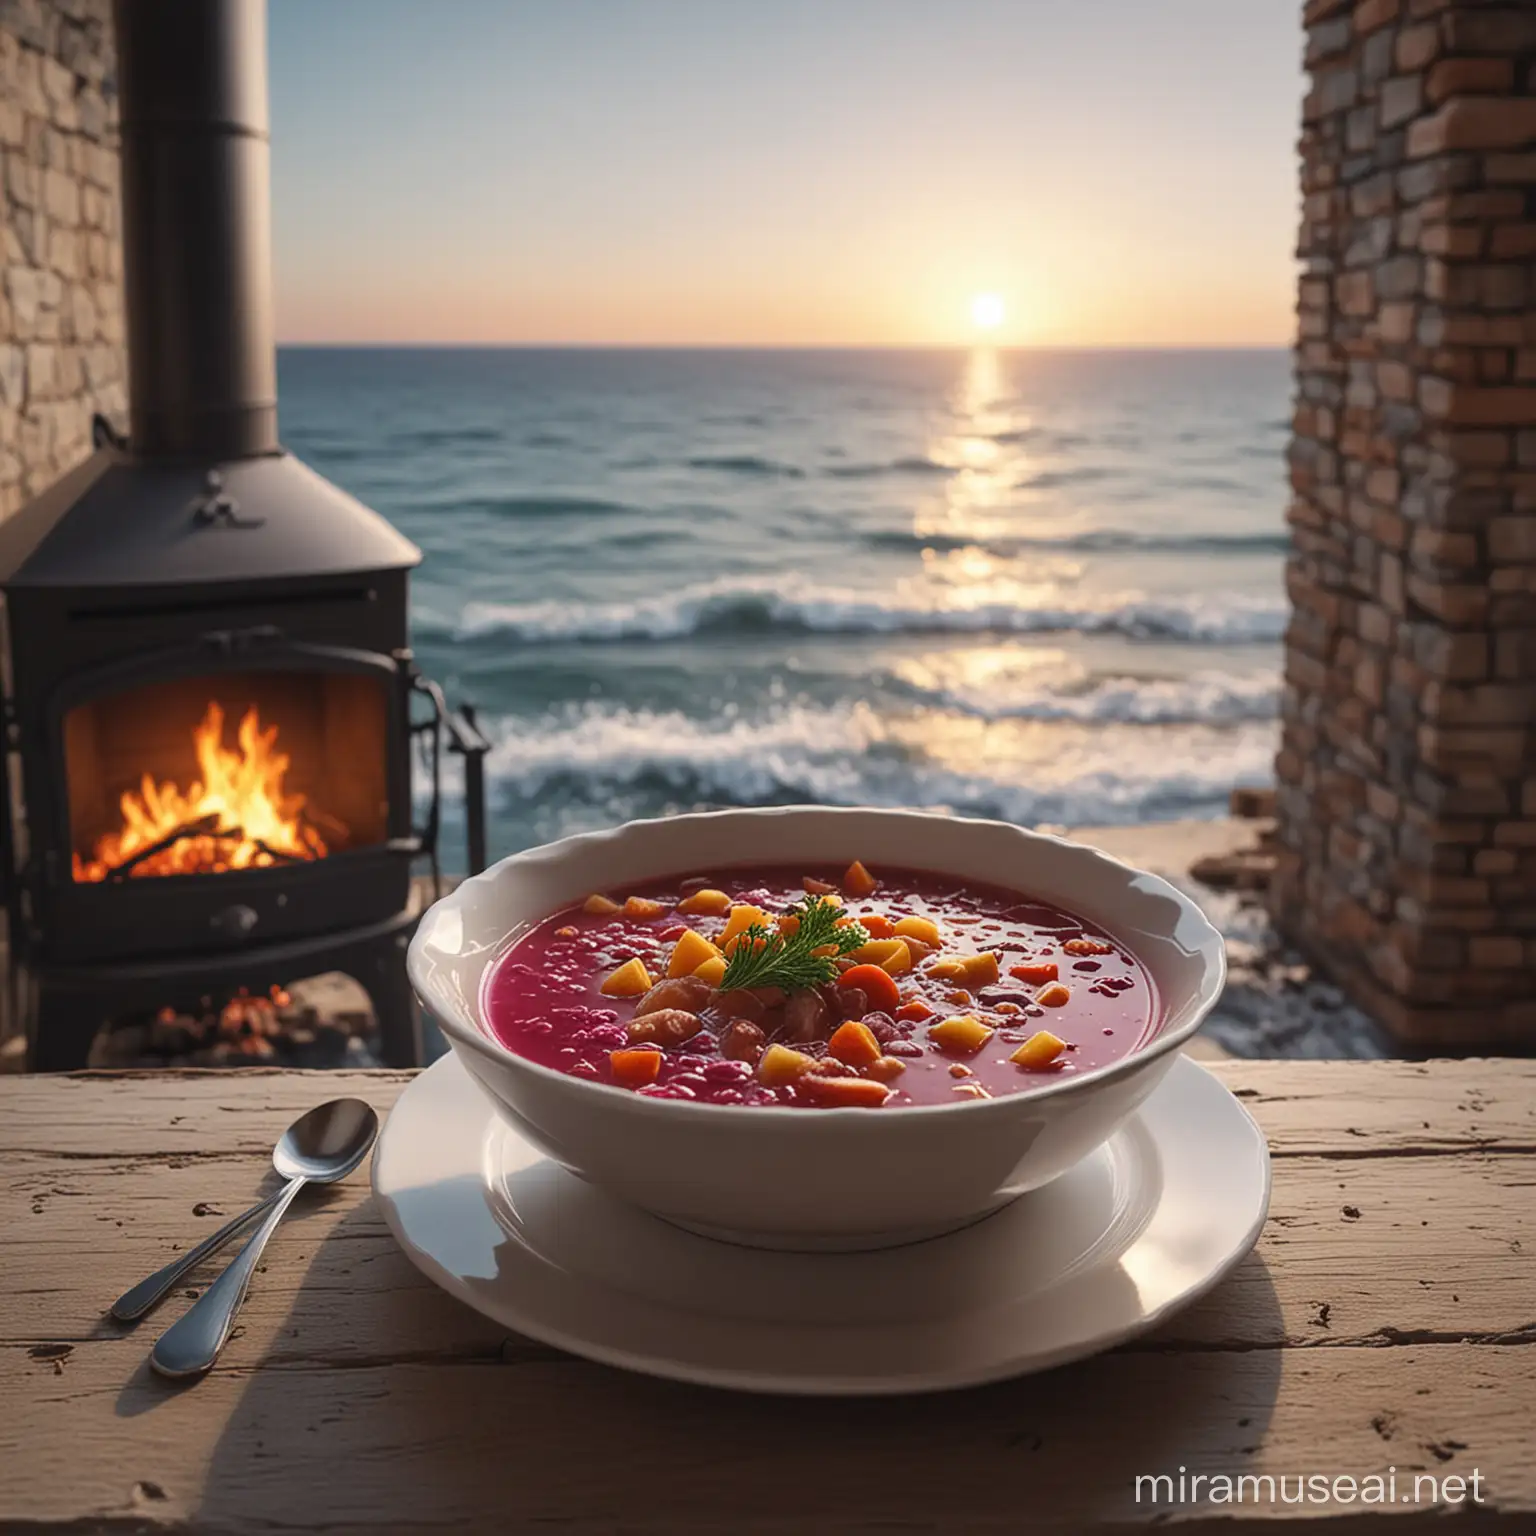 Borscht Soup by the Ocean Cozy Fireplace Setting